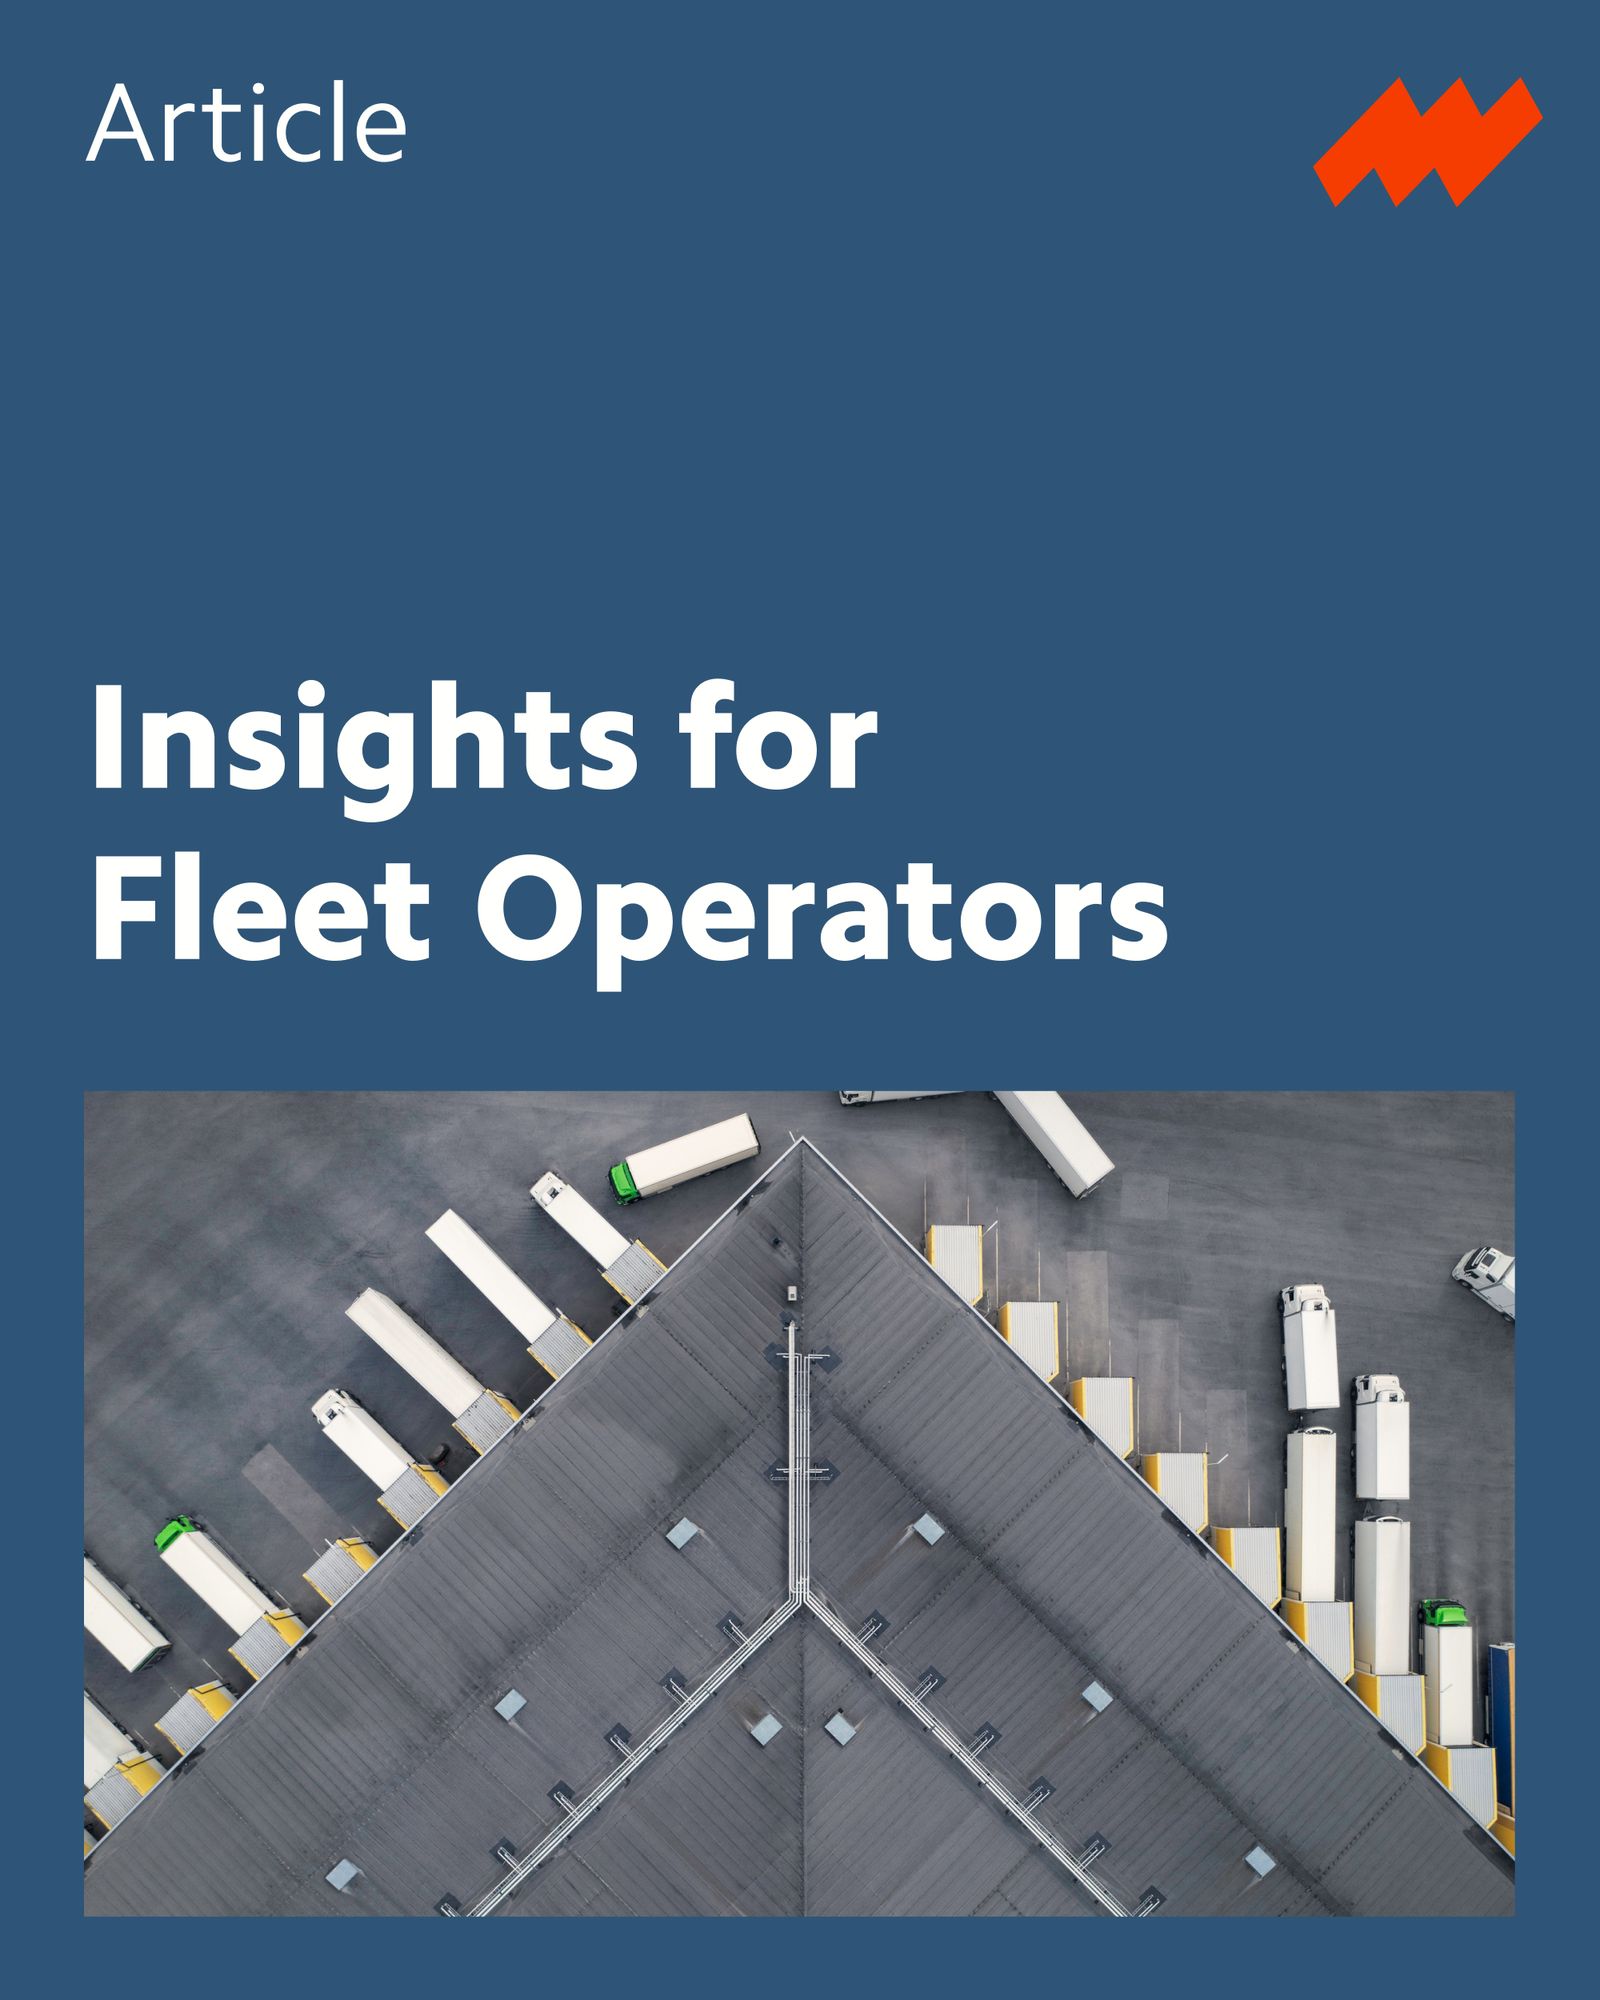 Article: Insights for Fleet Operators